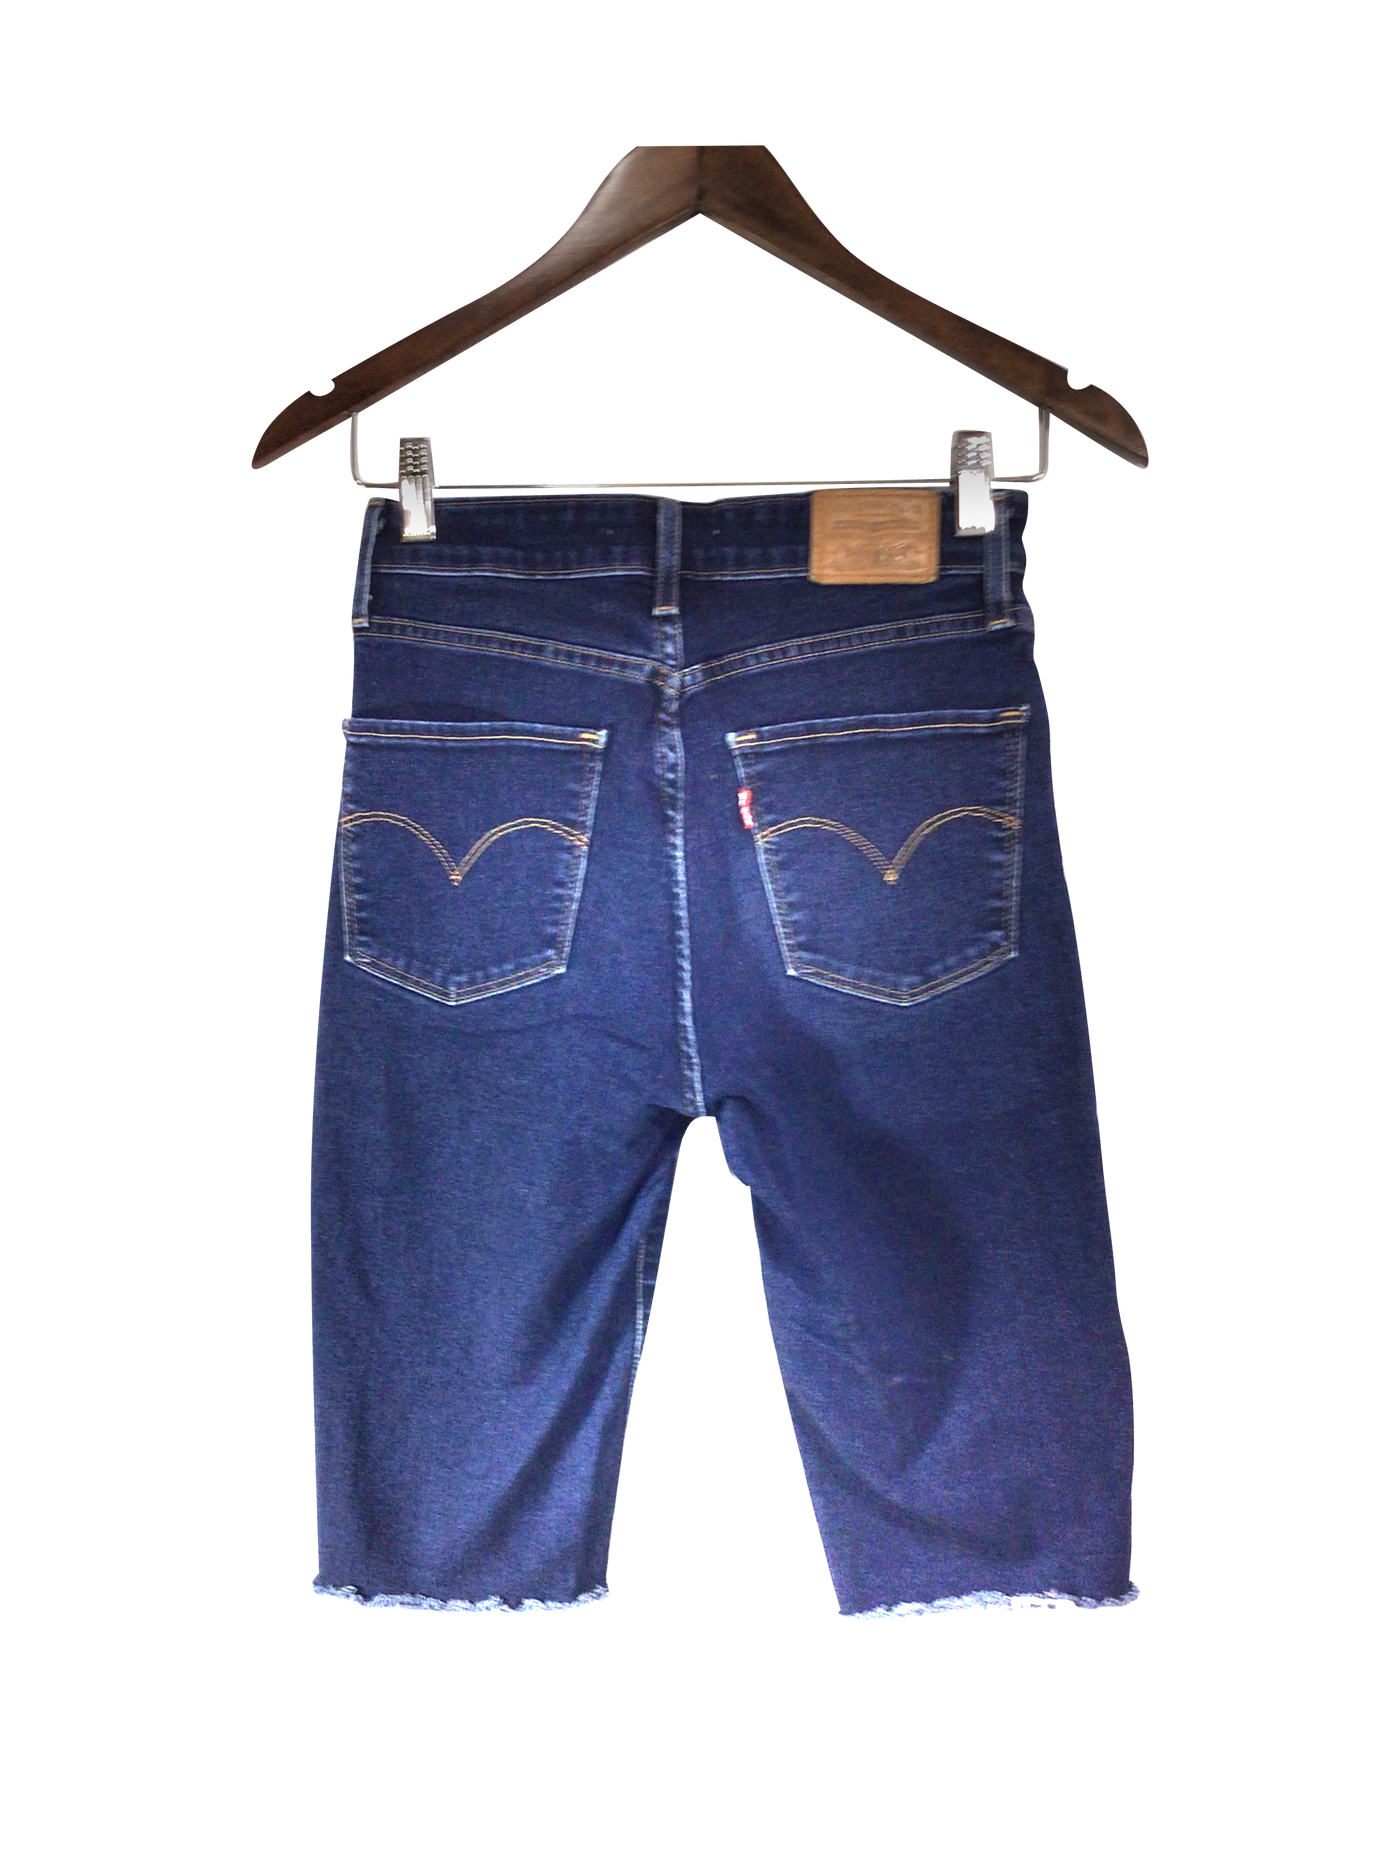 LEVI'S Jeans Shorts Regular fit in Blue - Size 26 | 25.99 $ KOOP